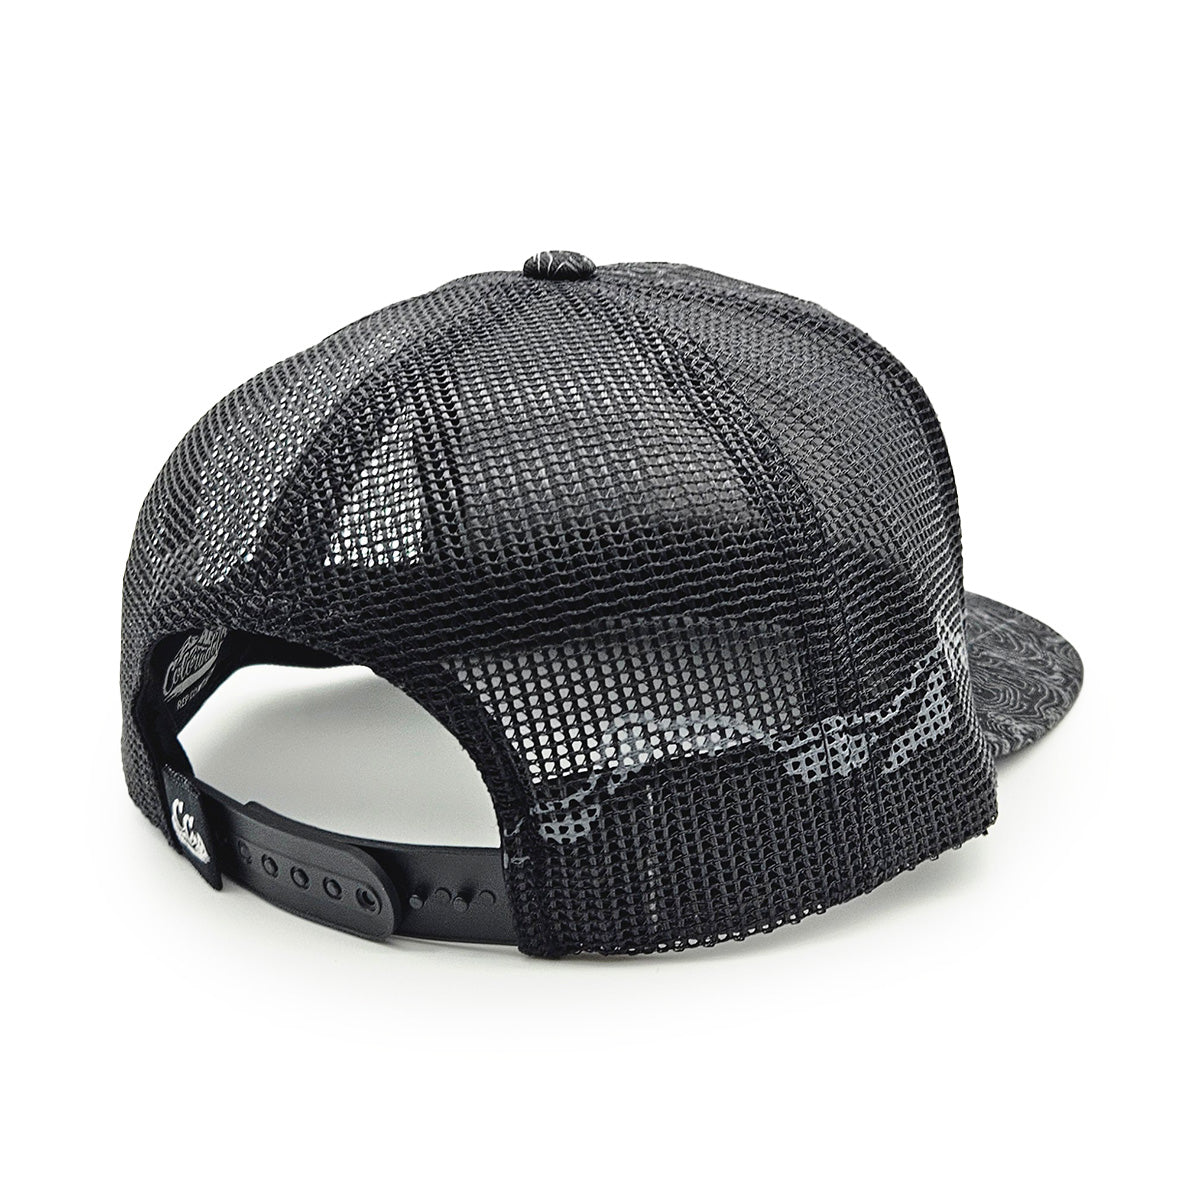 Black Topo Range Hat - Black/Charcoal